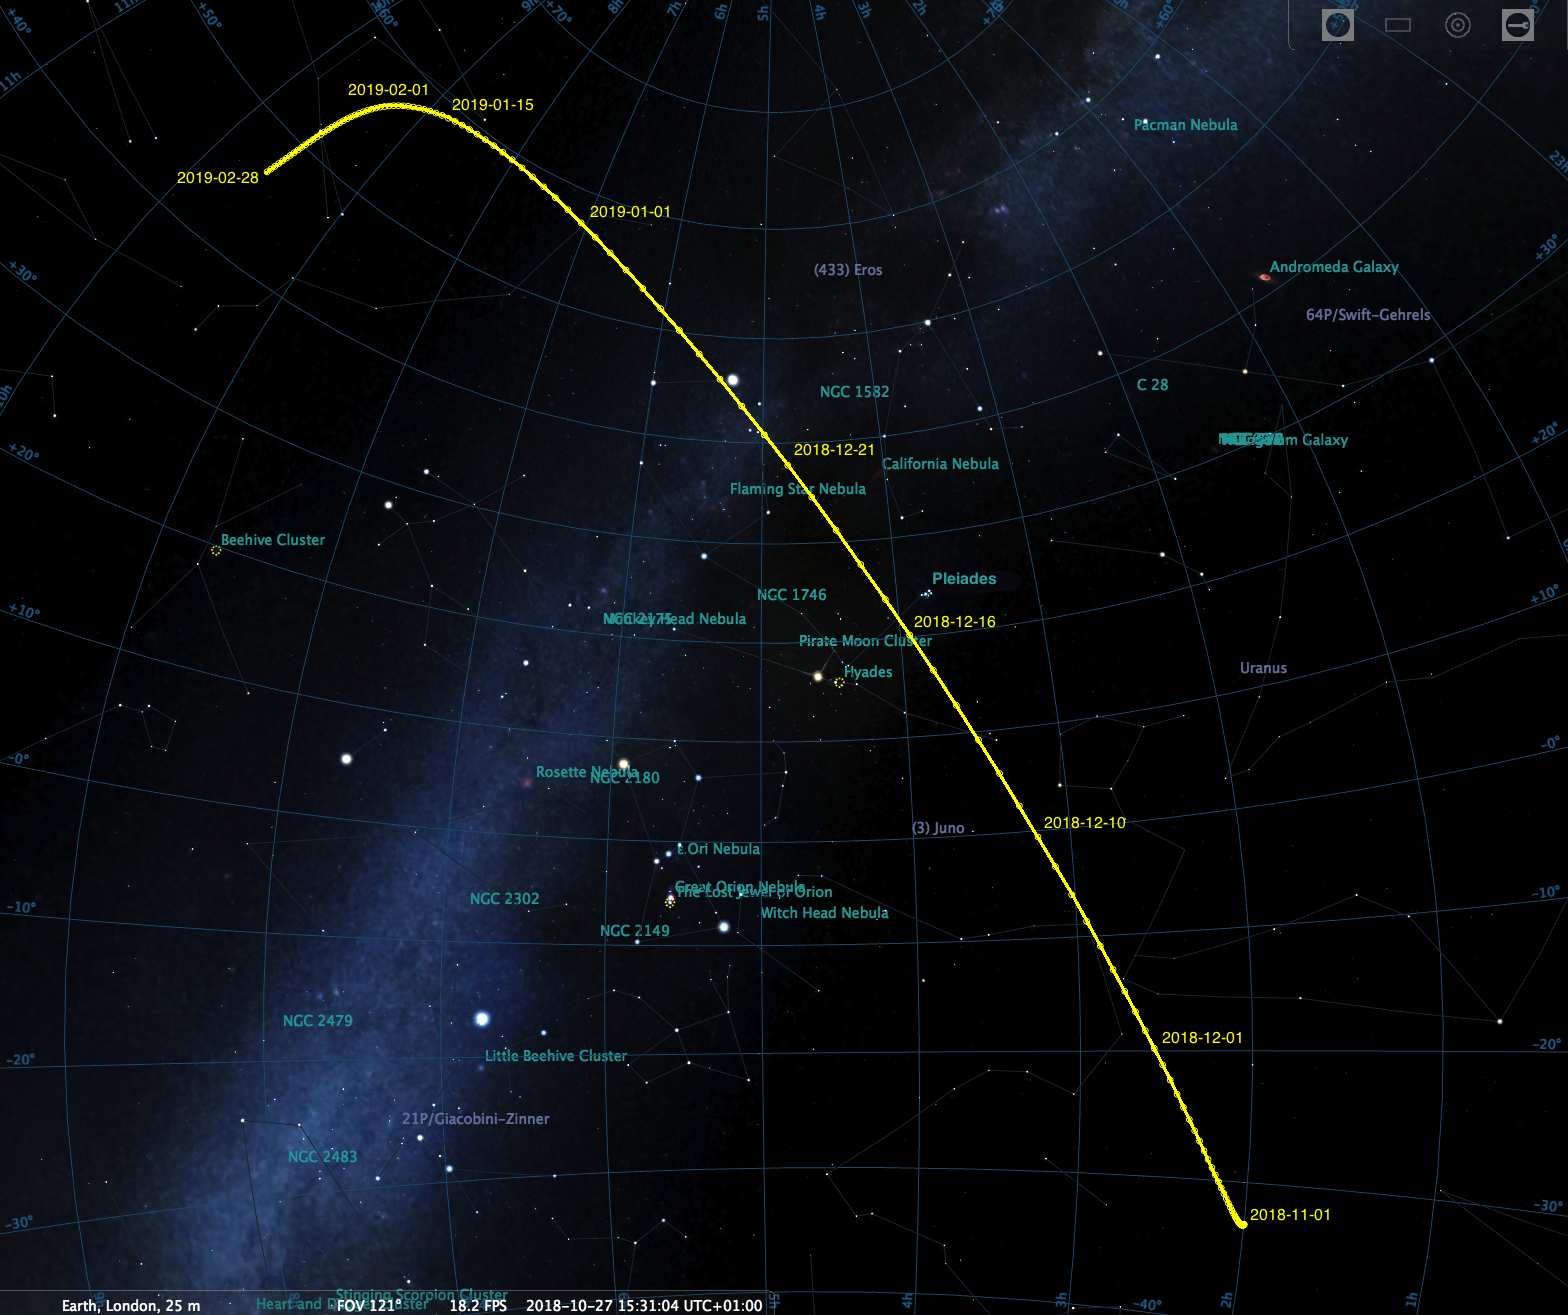 Comet's motion across the sky
from Nov 2018 through Feb 2019